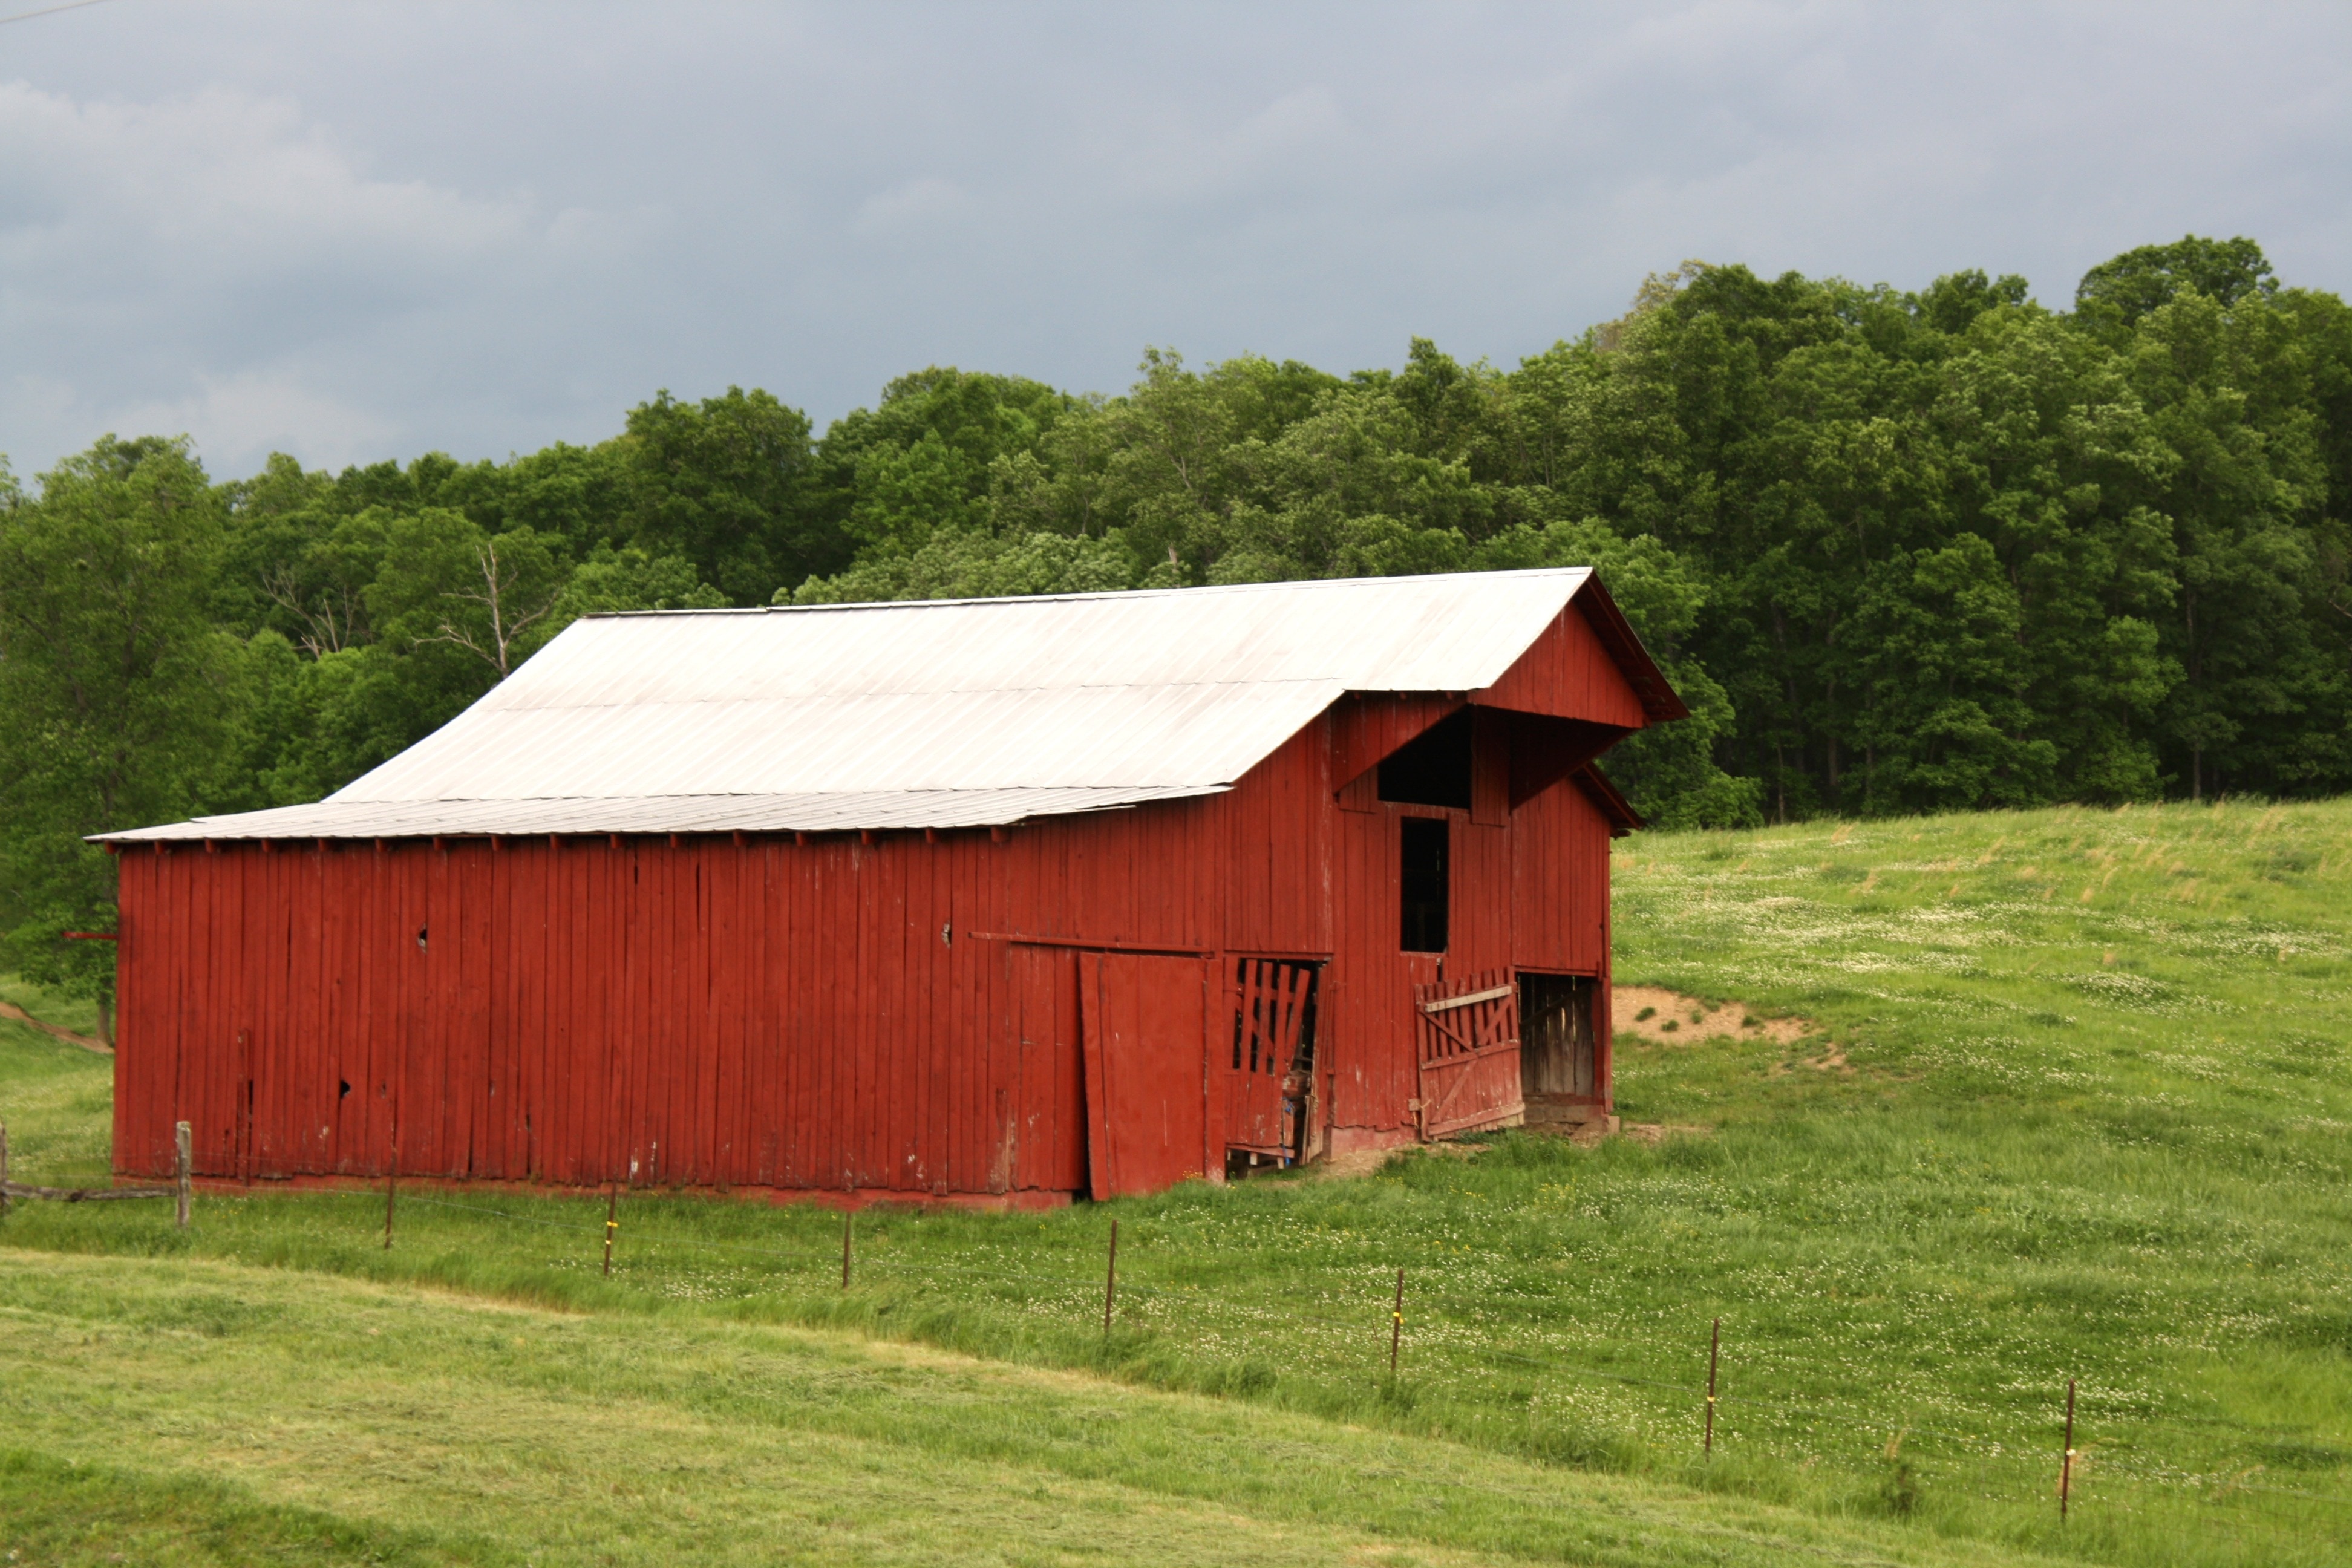 Tennessee, Gatlinburg, Field, Red, Barn, grass, built structure